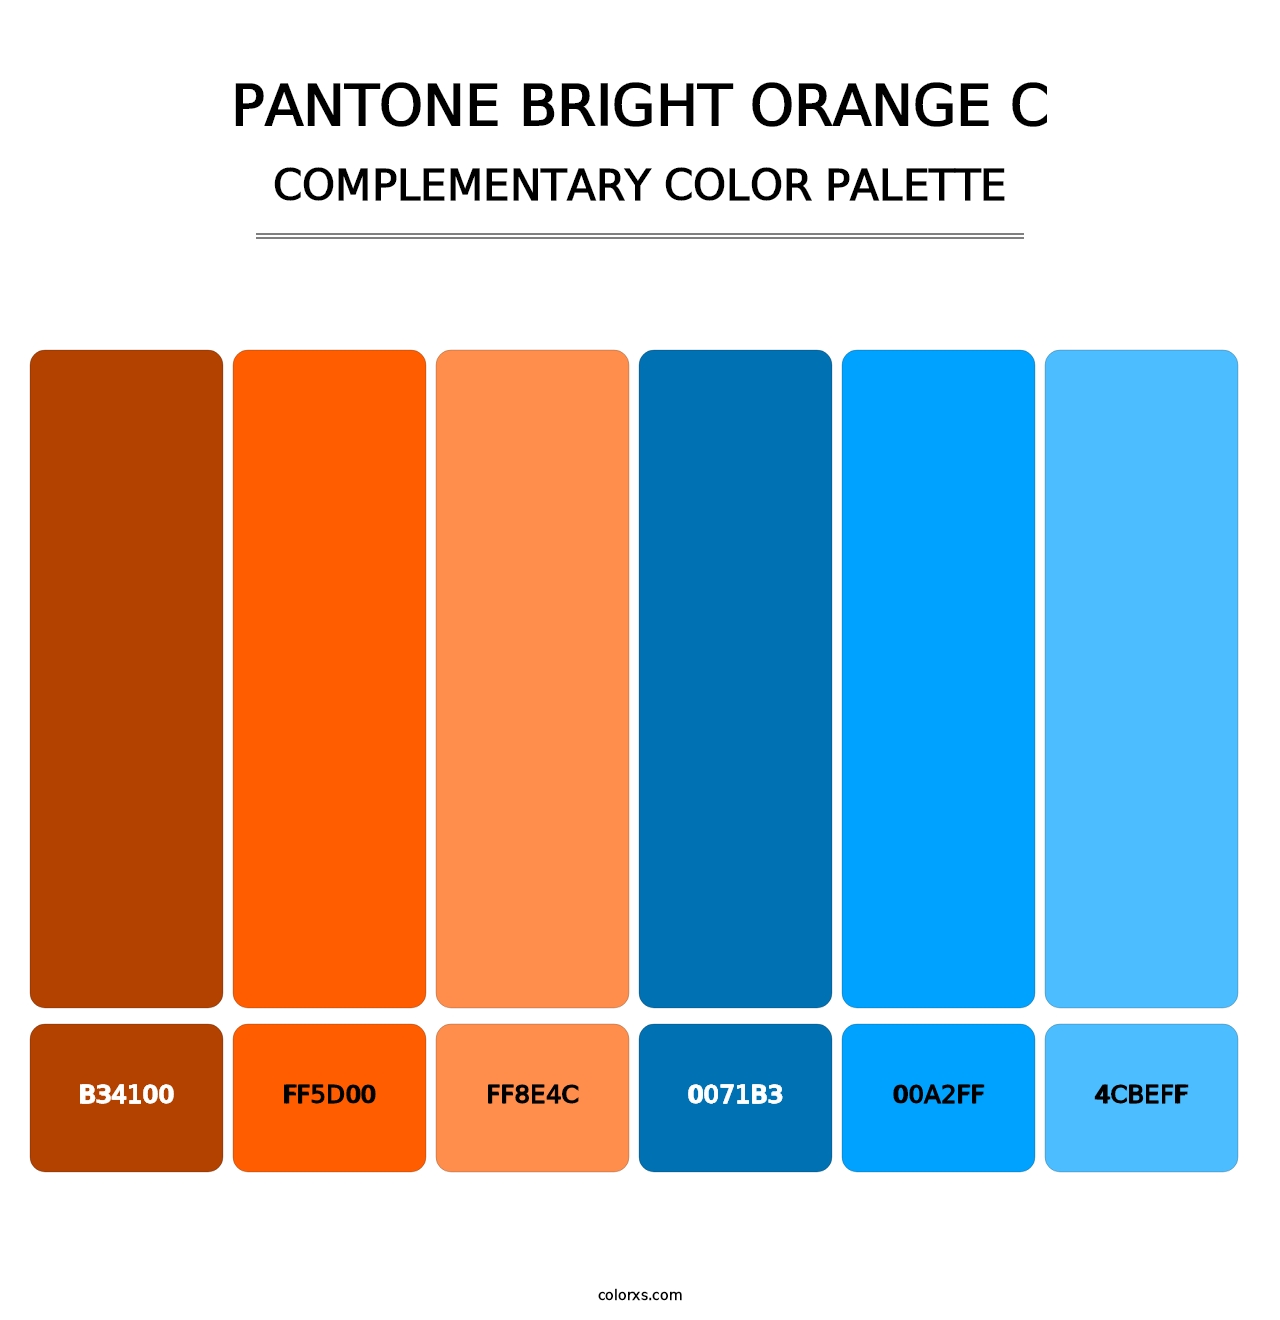 PANTONE Bright Orange C - Complementary Color Palette